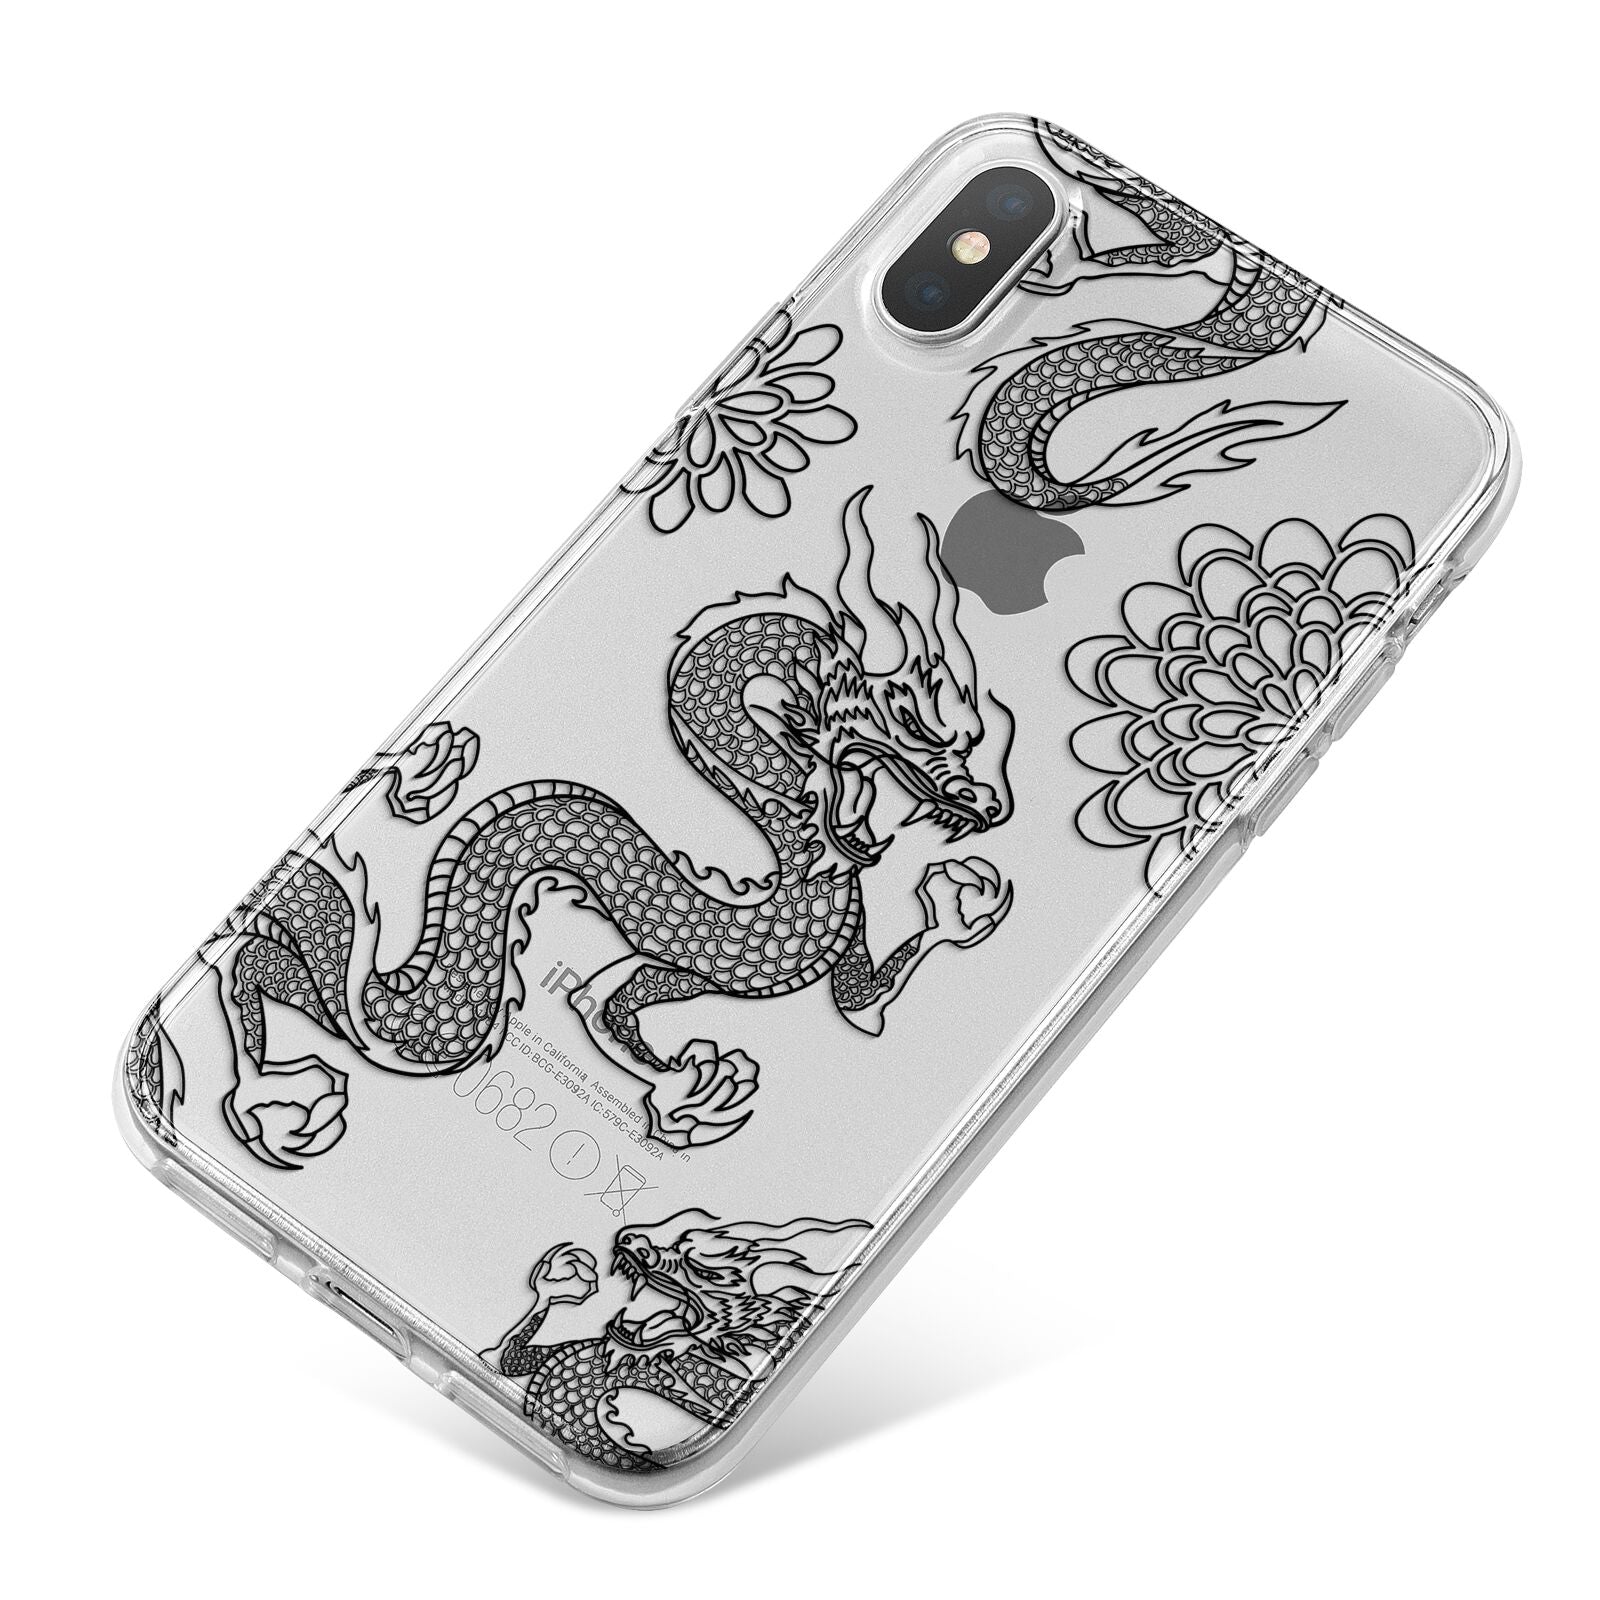 Black Dragon iPhone X Bumper Case on Silver iPhone